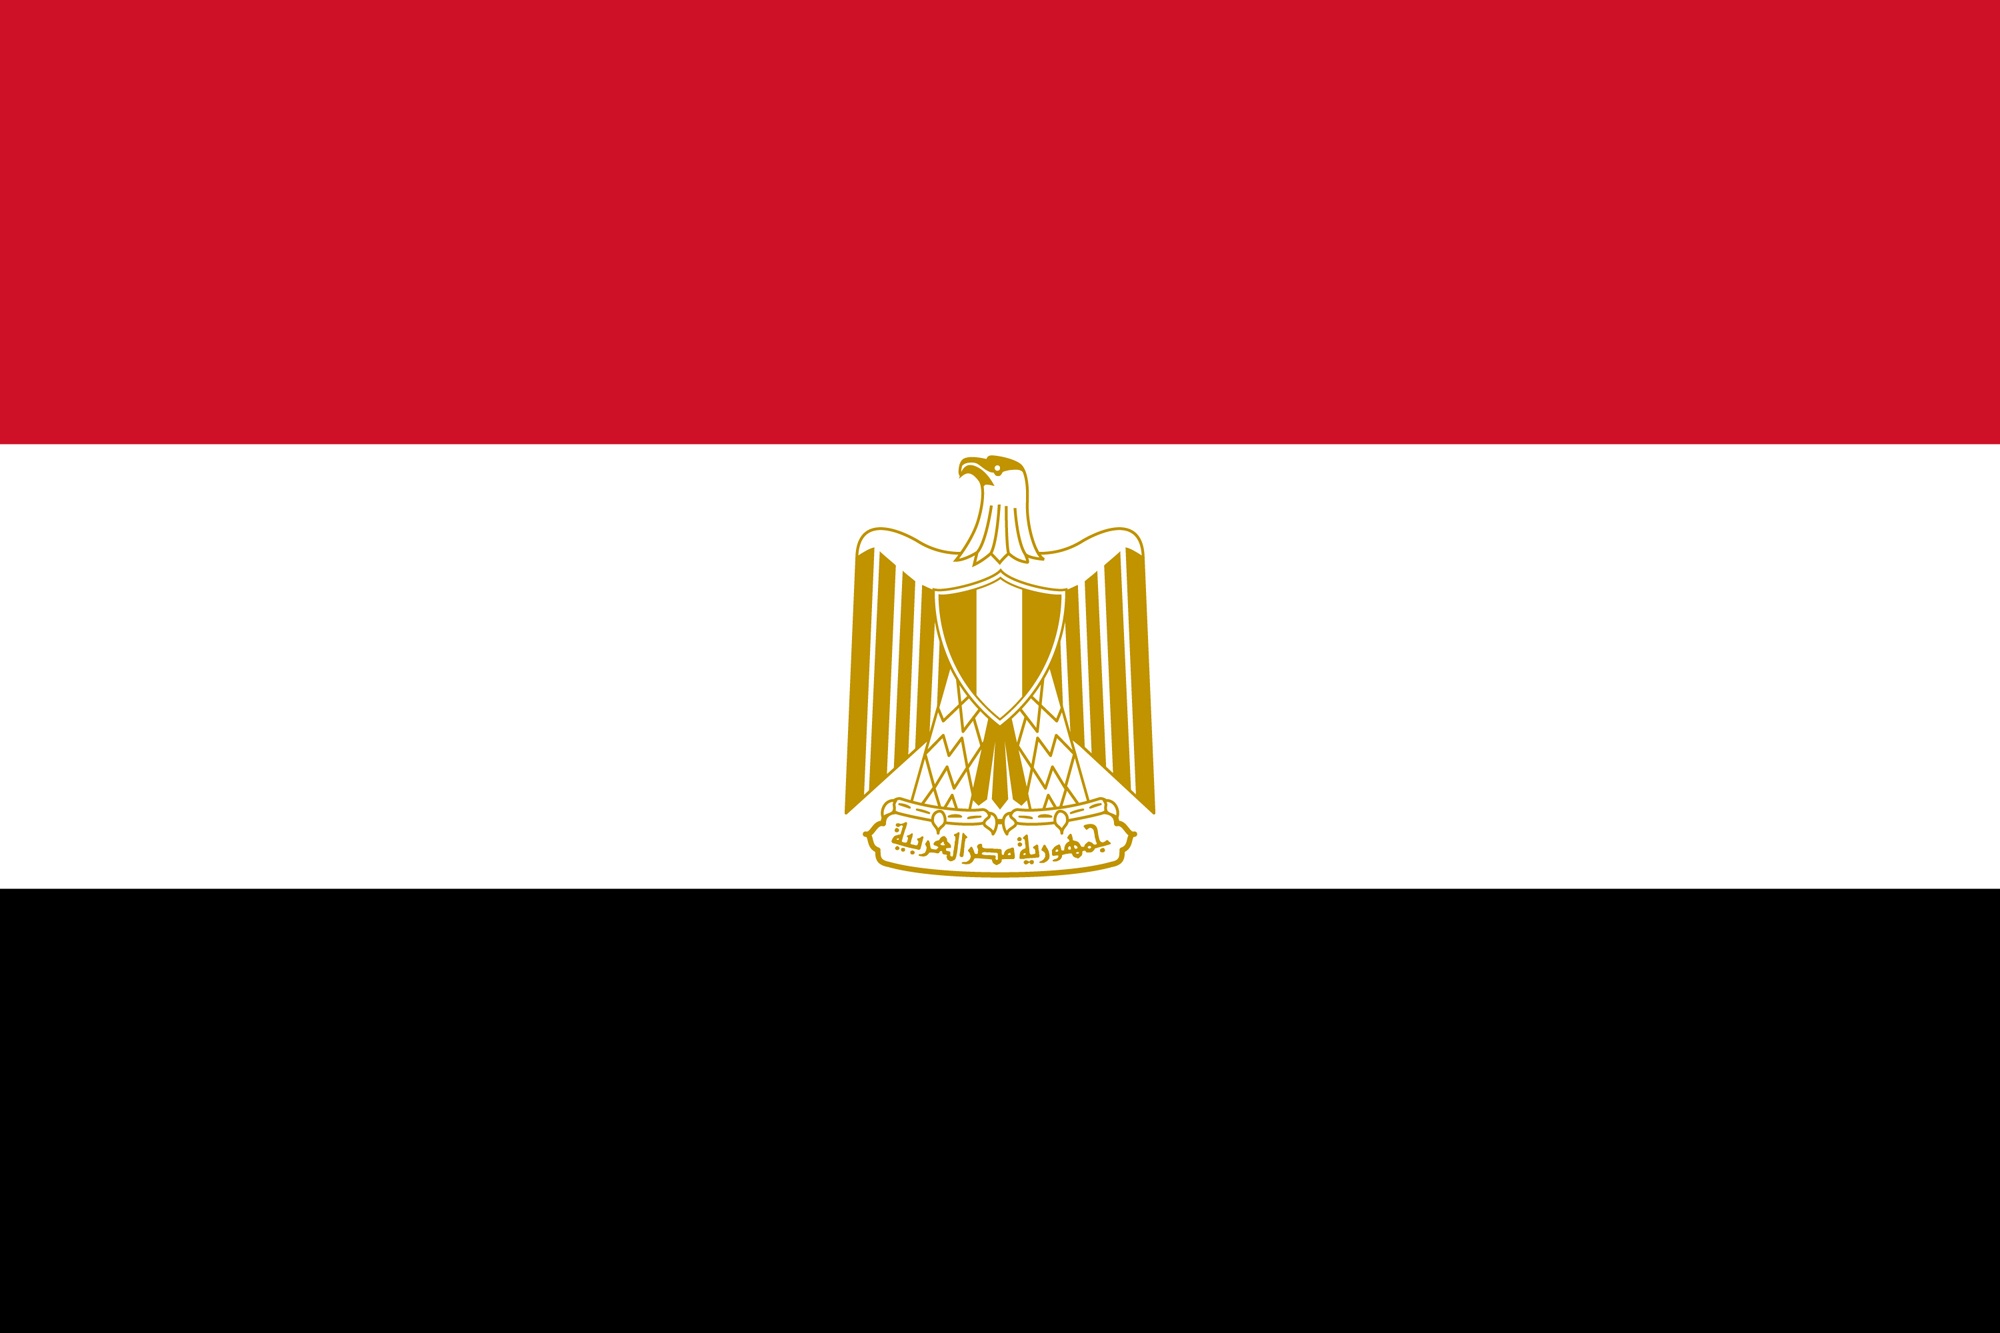 Egypt Prayer of the Day - Today's prayer of the day focuses on Egypt. Let us pray for Egypt today. #Egypt #PrayeroftheDay